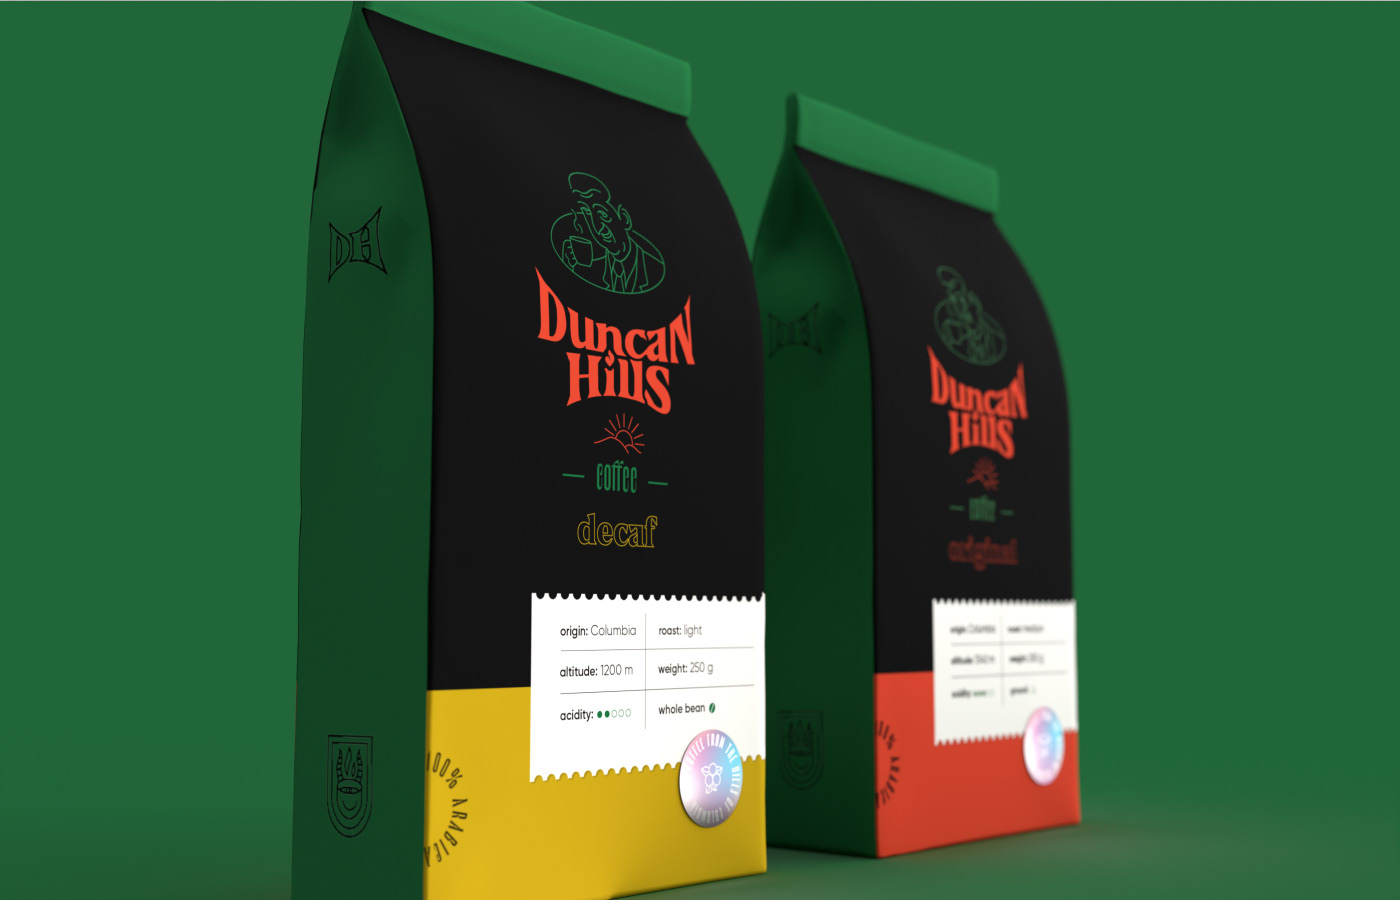 Coffee Cold Brew Duncan Hills metalocalypse Packaging